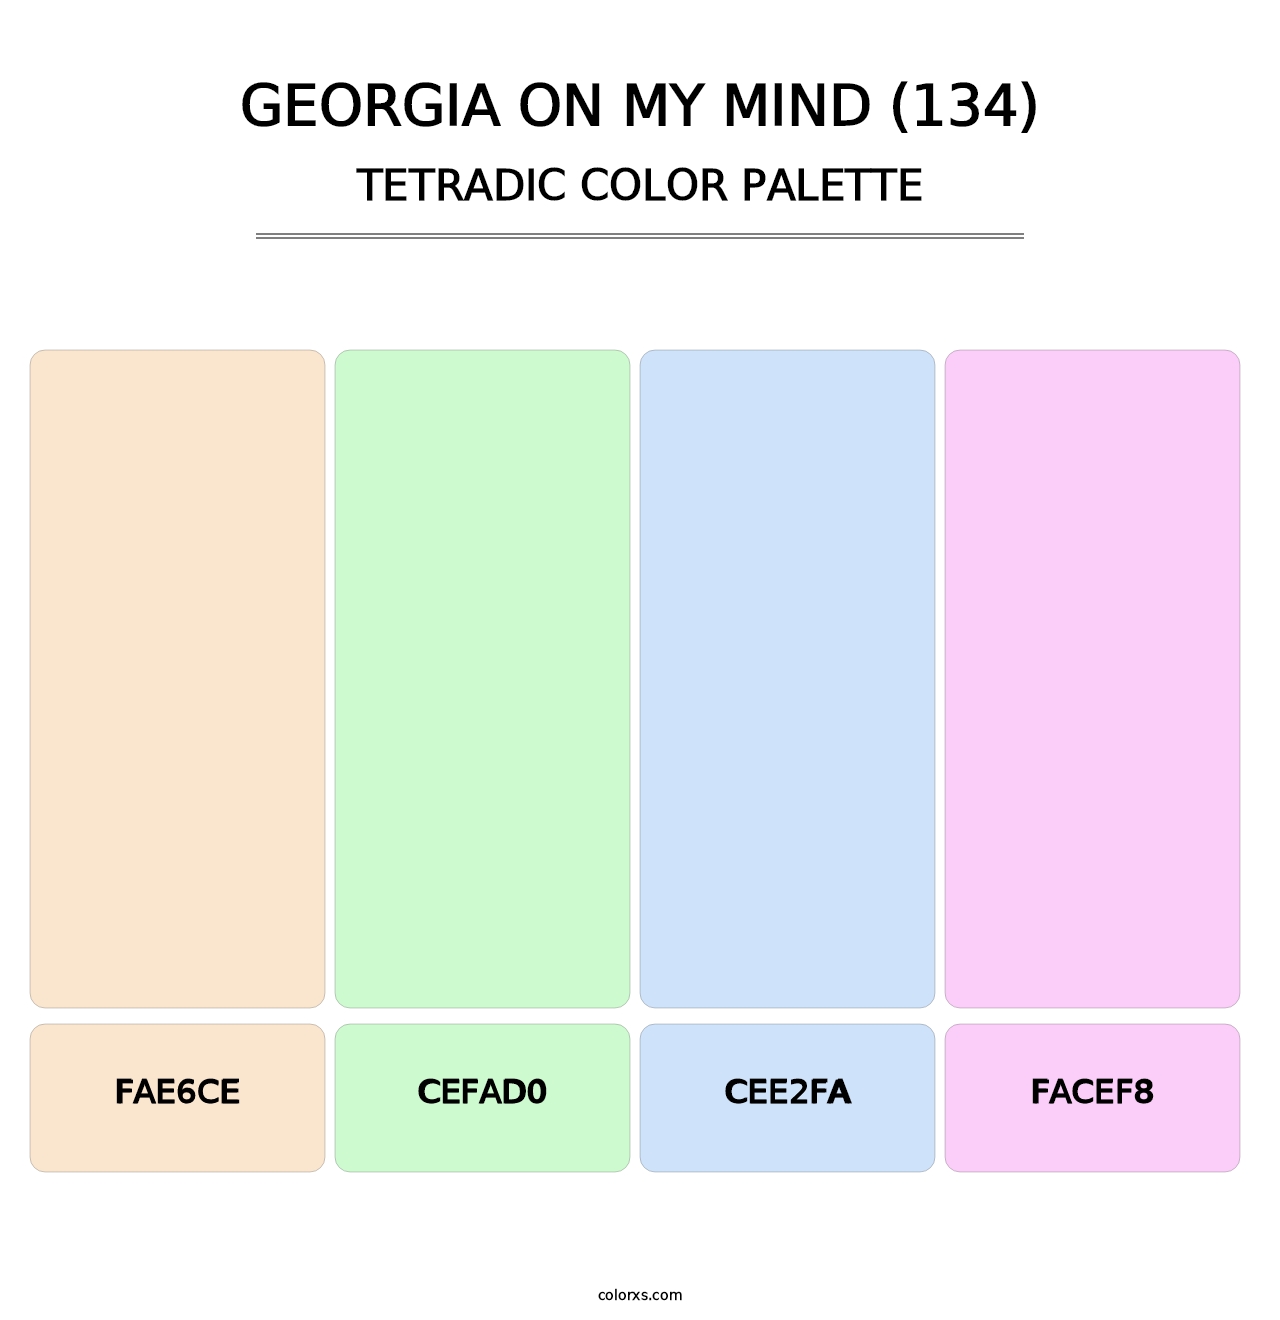 Georgia On My Mind (134) - Tetradic Color Palette